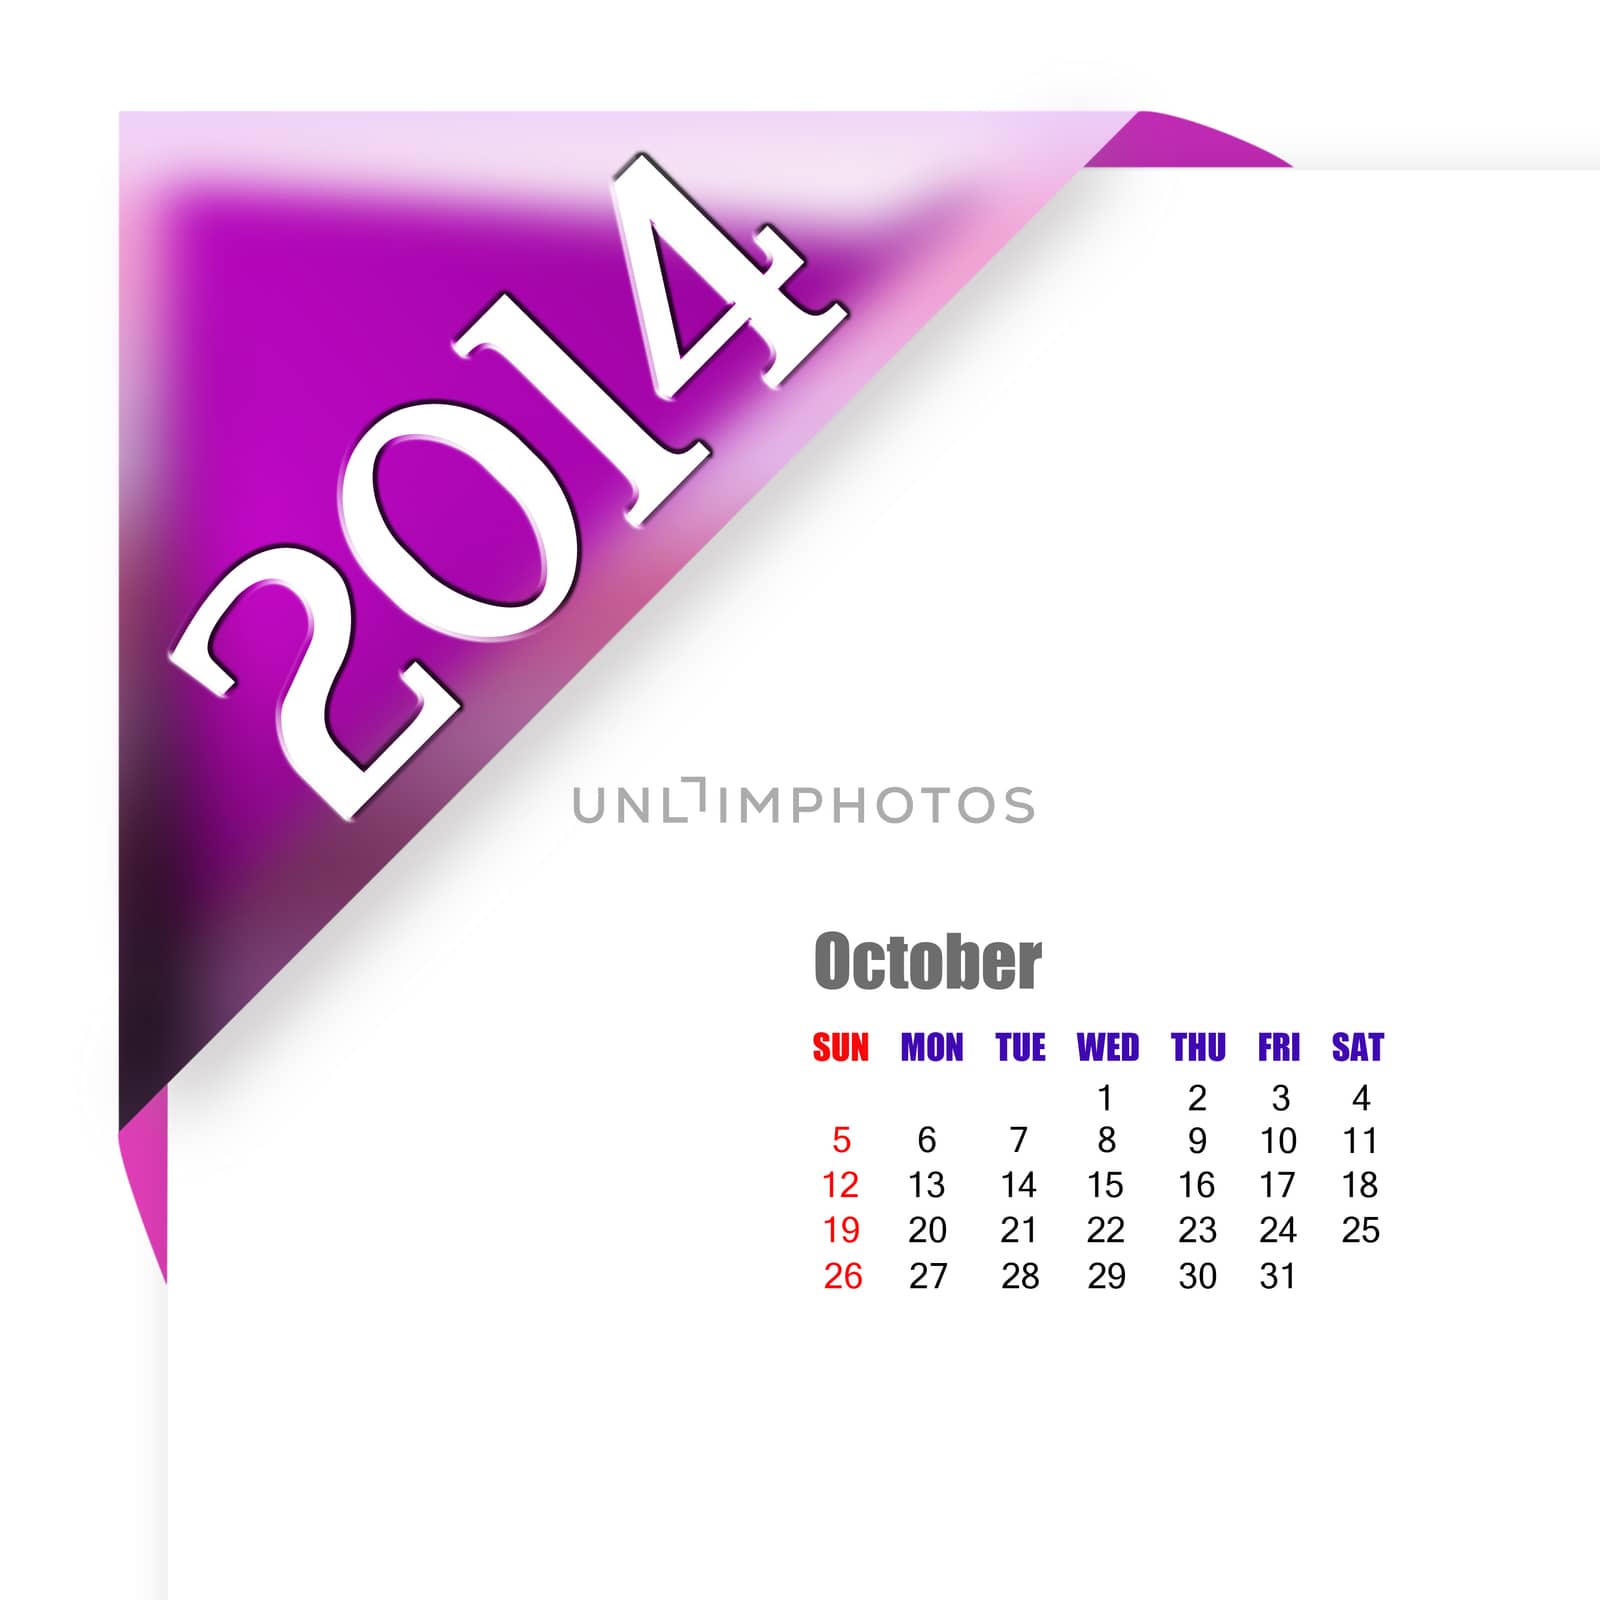 October of 2014 calendar 